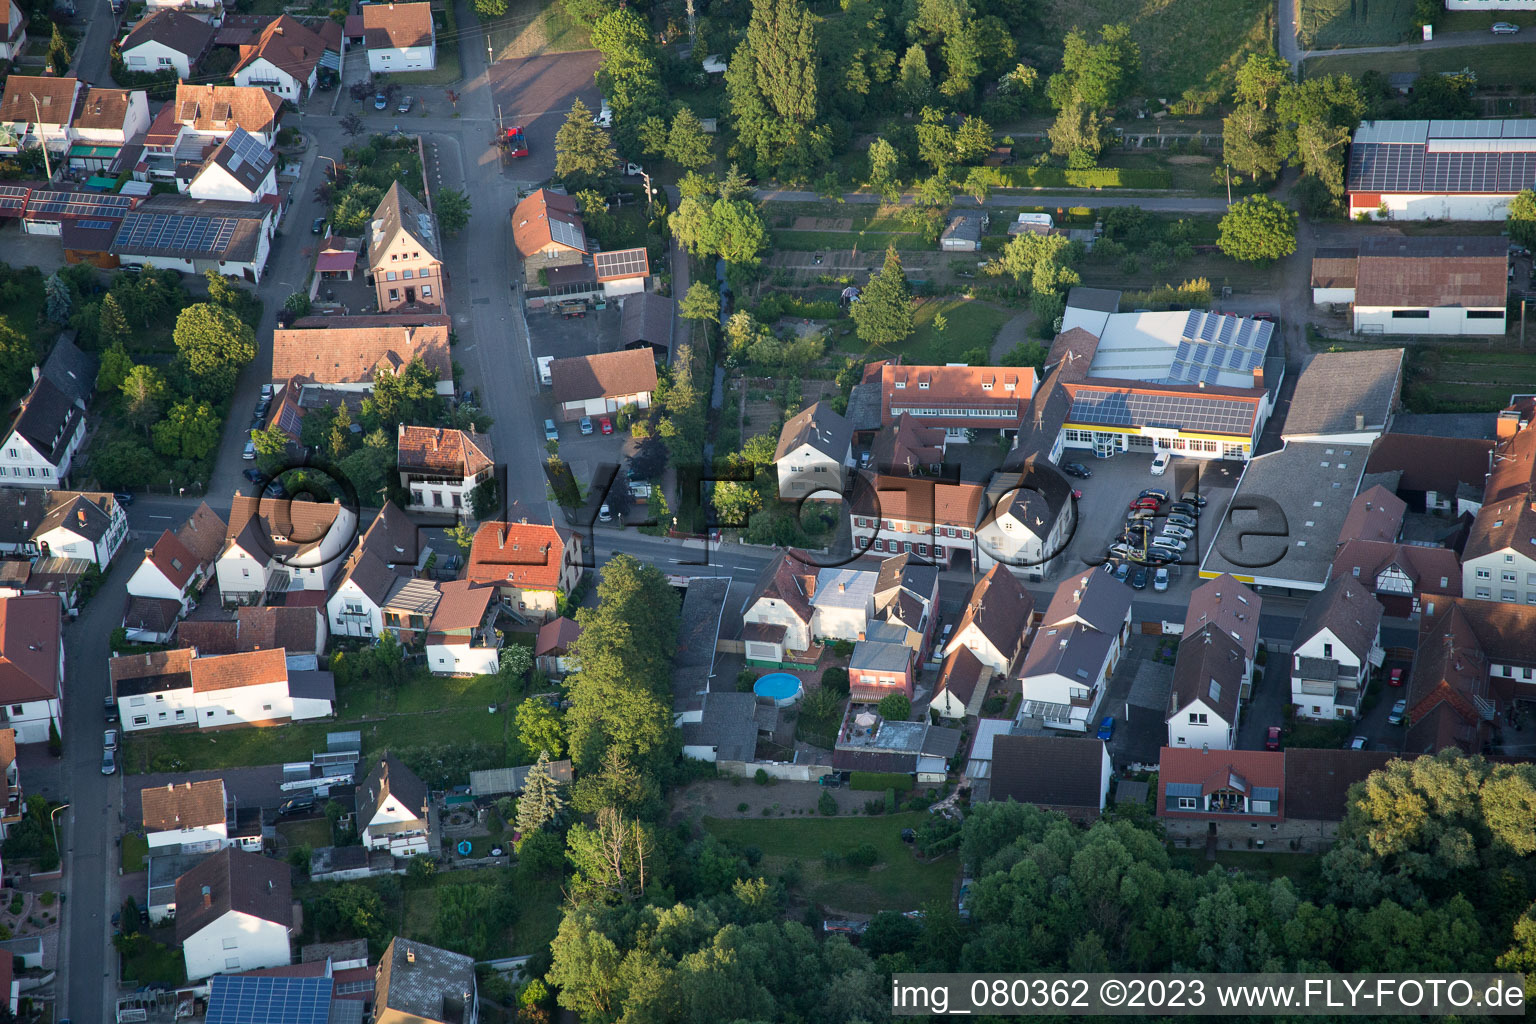 District Ingenheim in Billigheim-Ingenheim in the state Rhineland-Palatinate, Germany seen from above